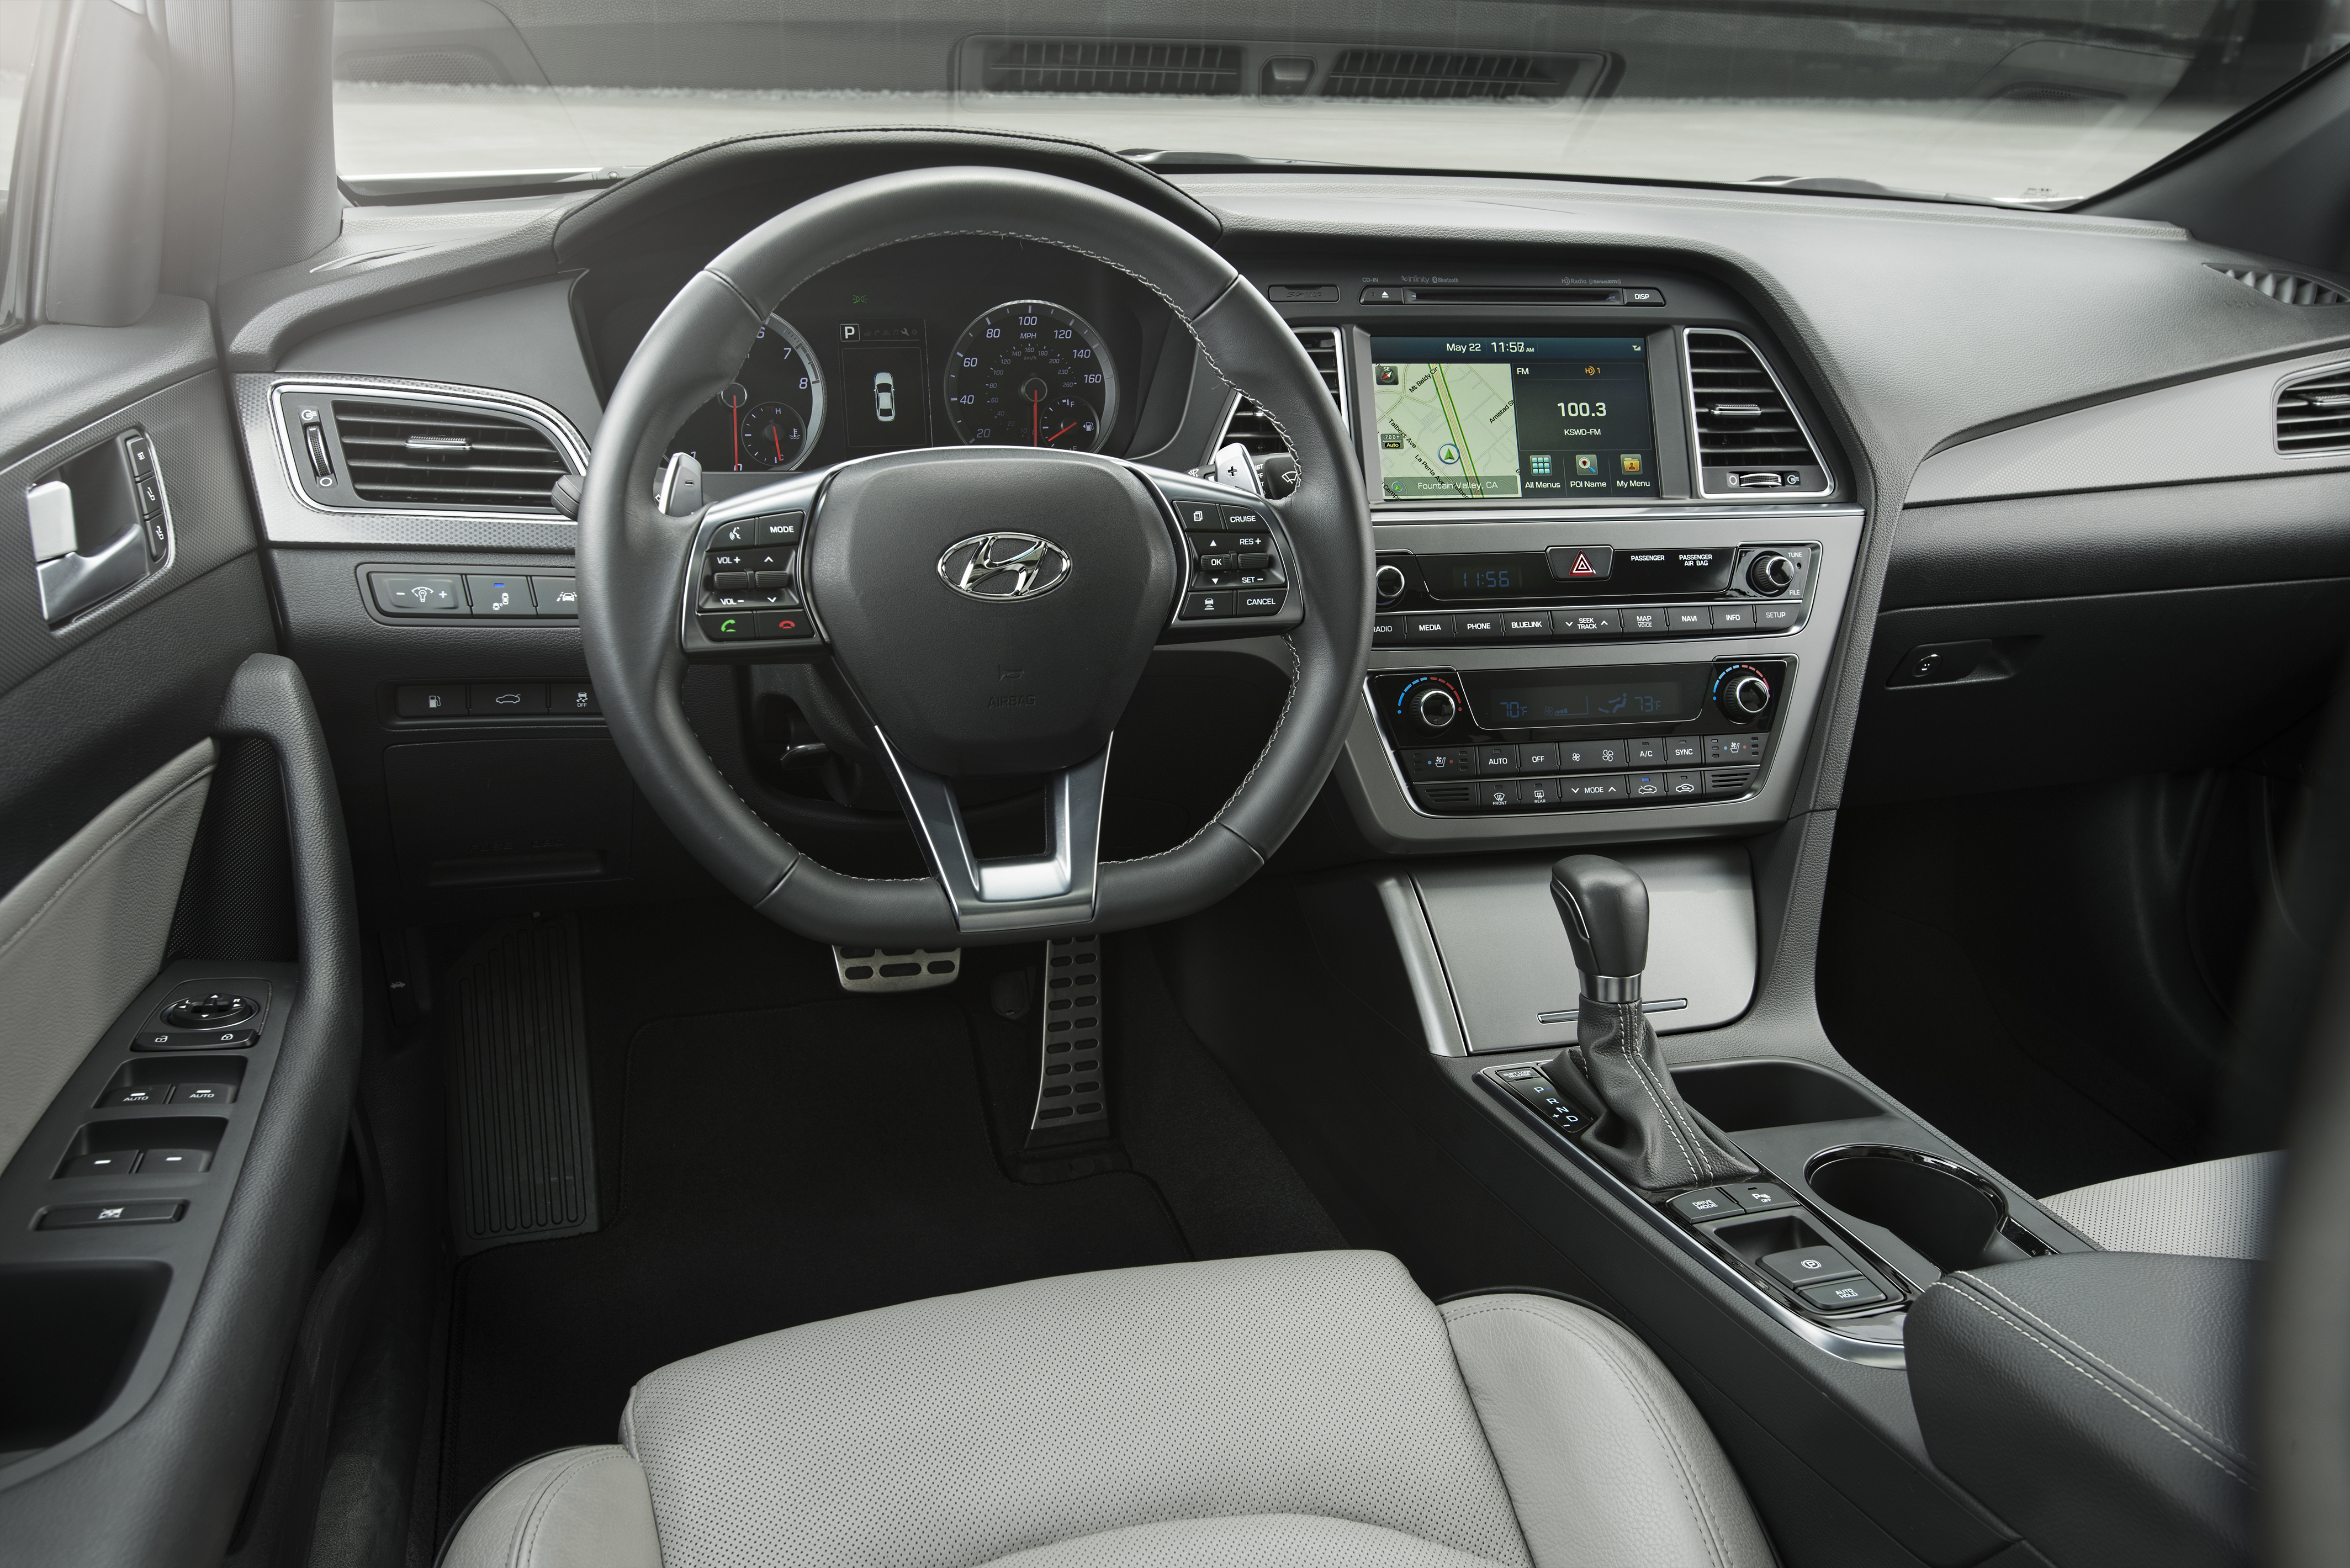 2015 Hyundai Sonata Interior